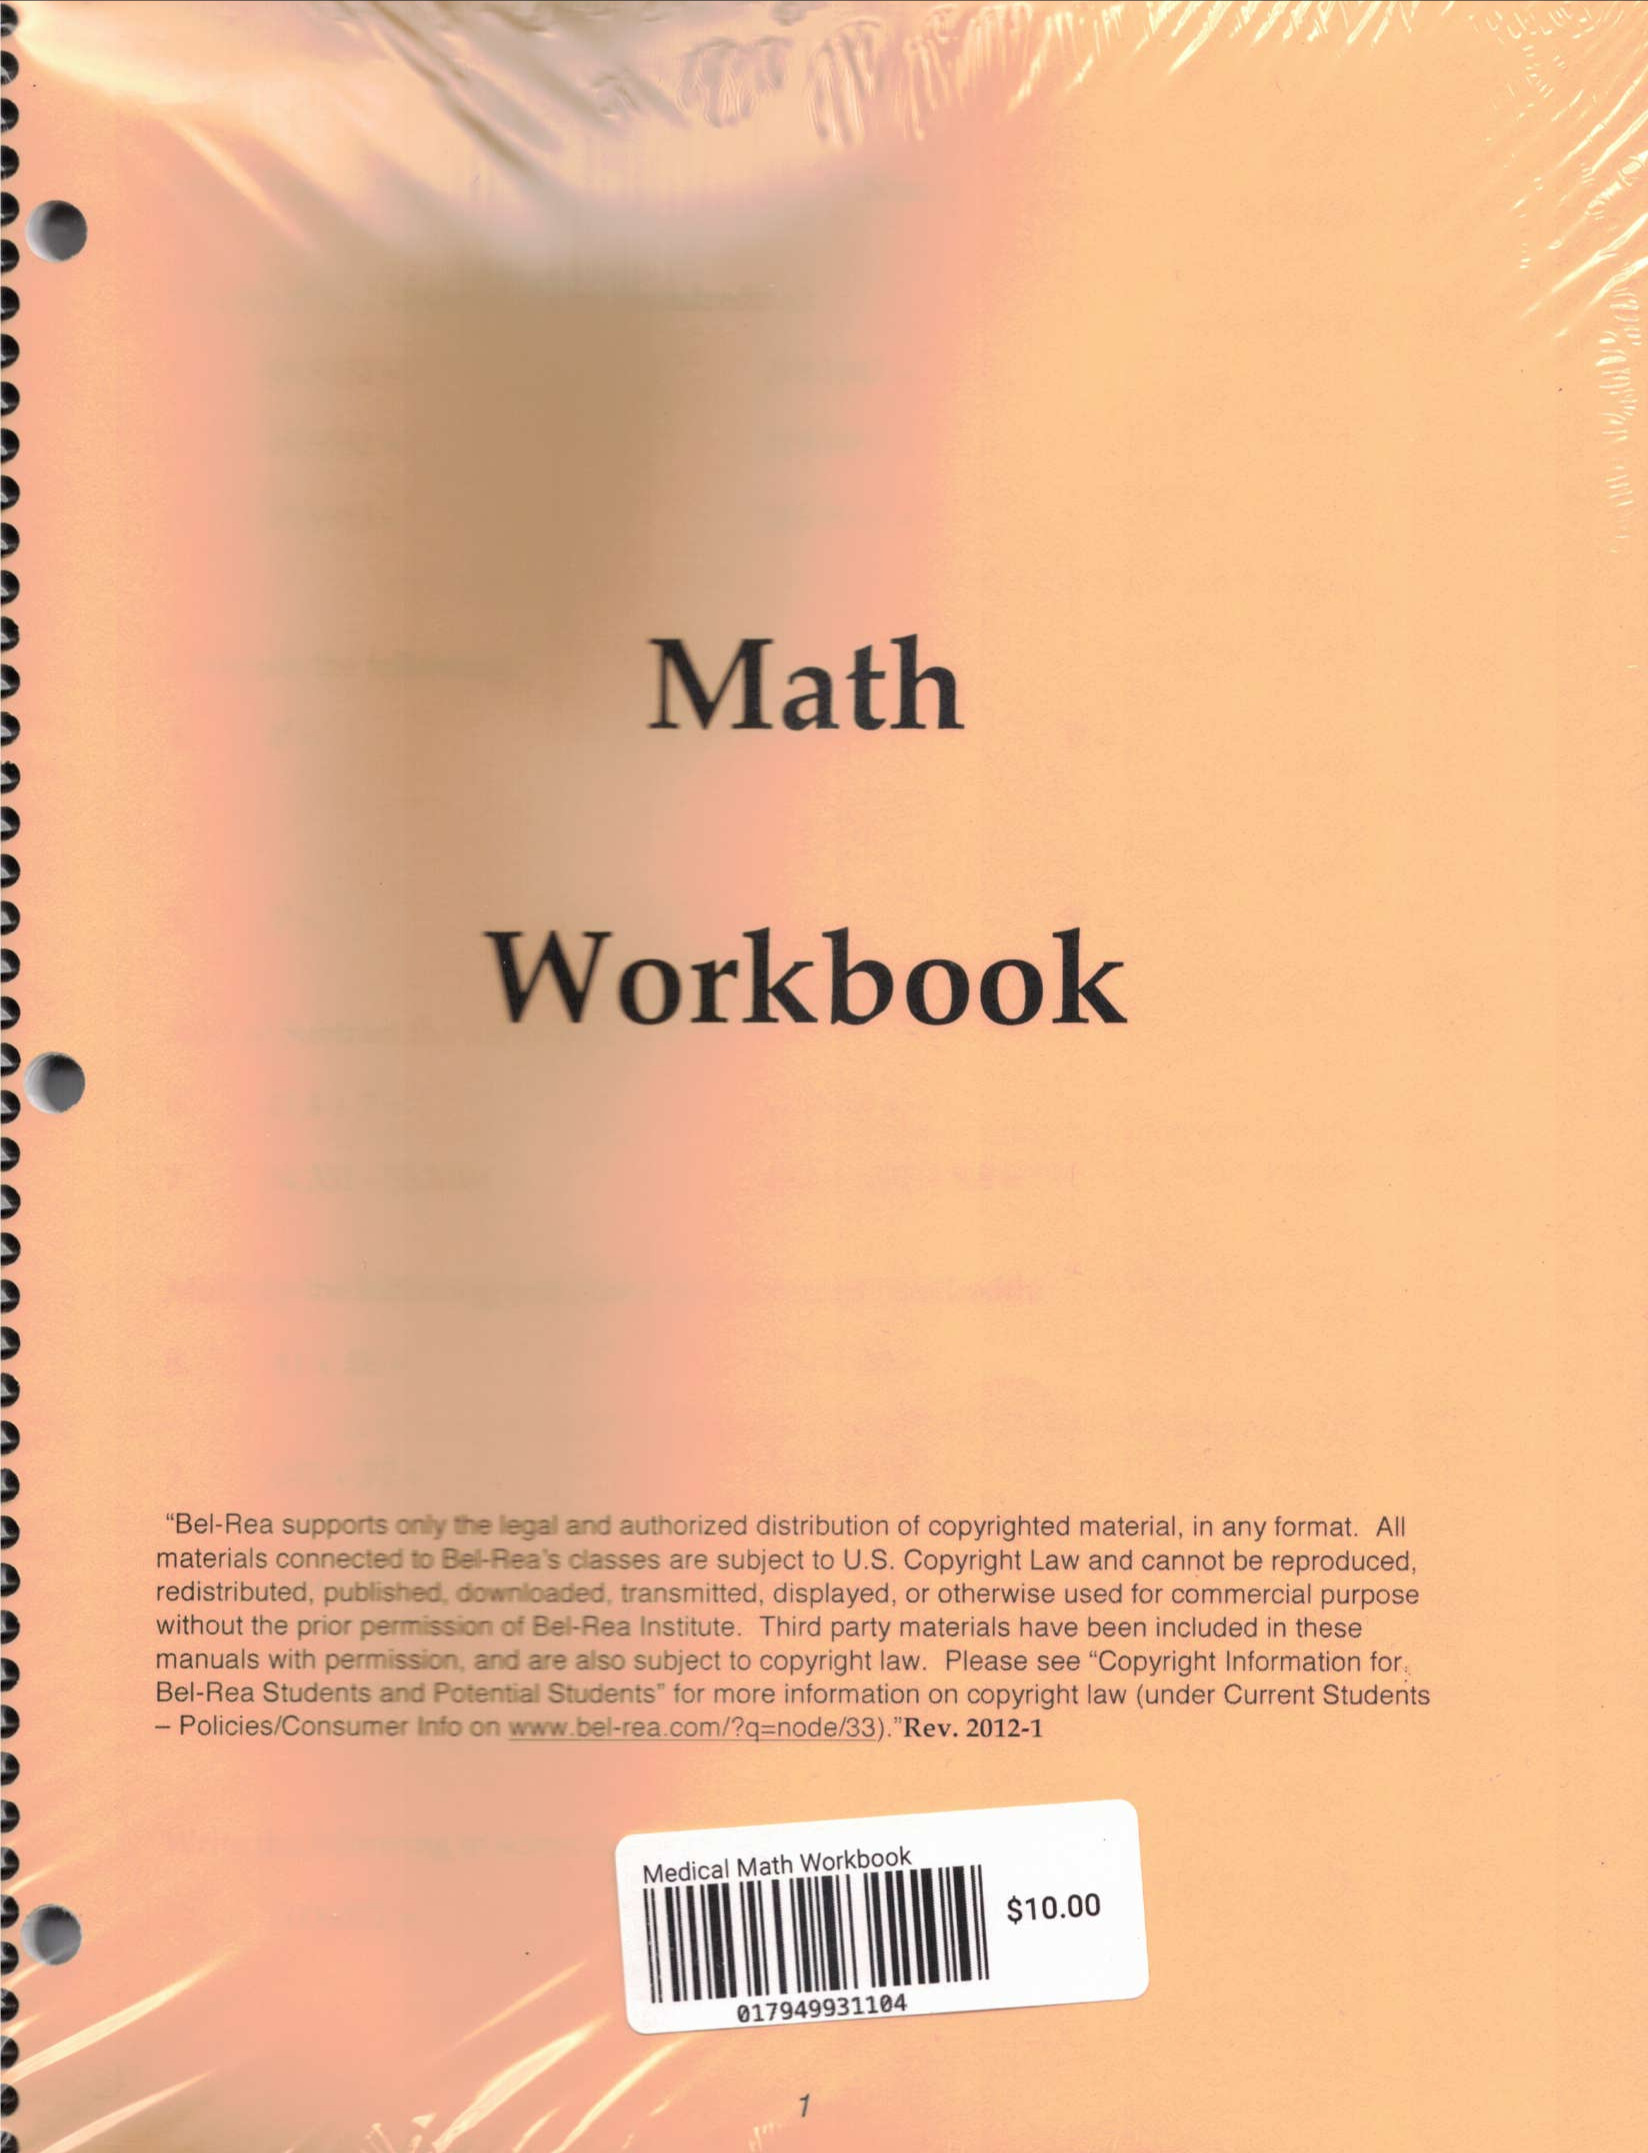 Institute　Workbook　Animal　Manual　–　Math　of　Technology　Medical　Bel-Rea